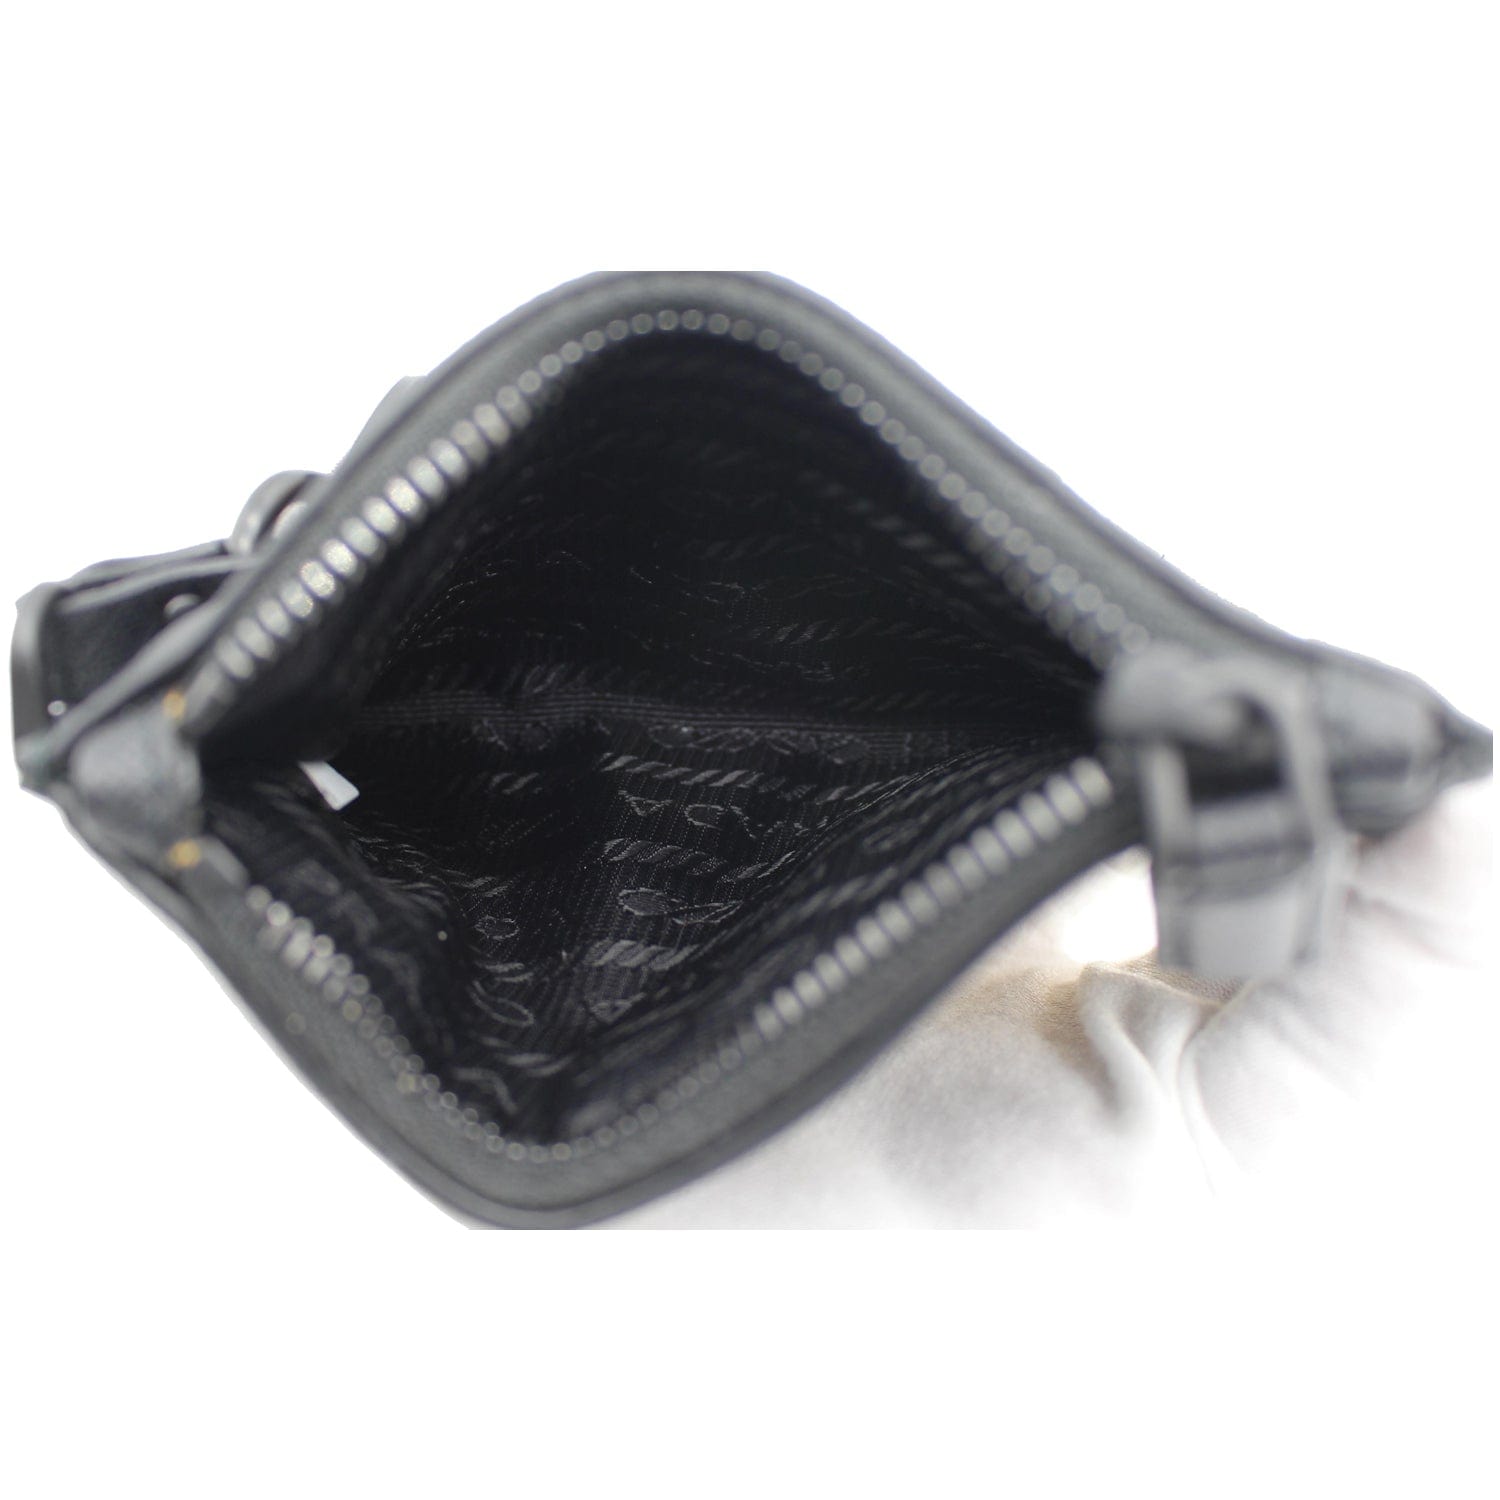 Prada coin purse keychain - Black